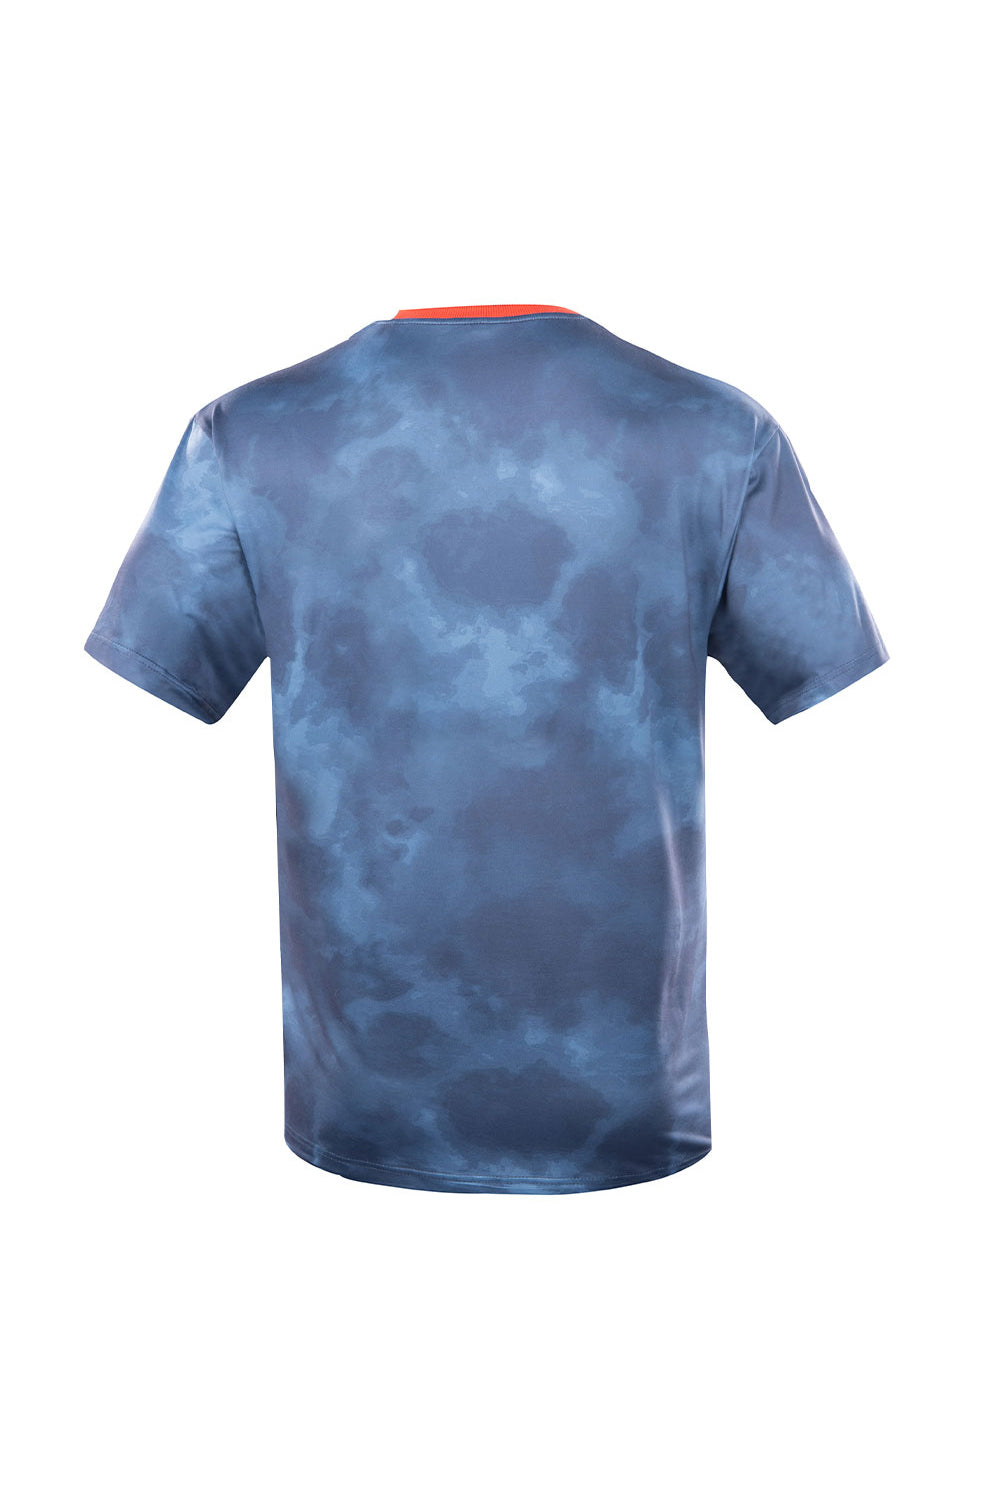 GINGTTO Herren Rundhals T-Shirts-Blau